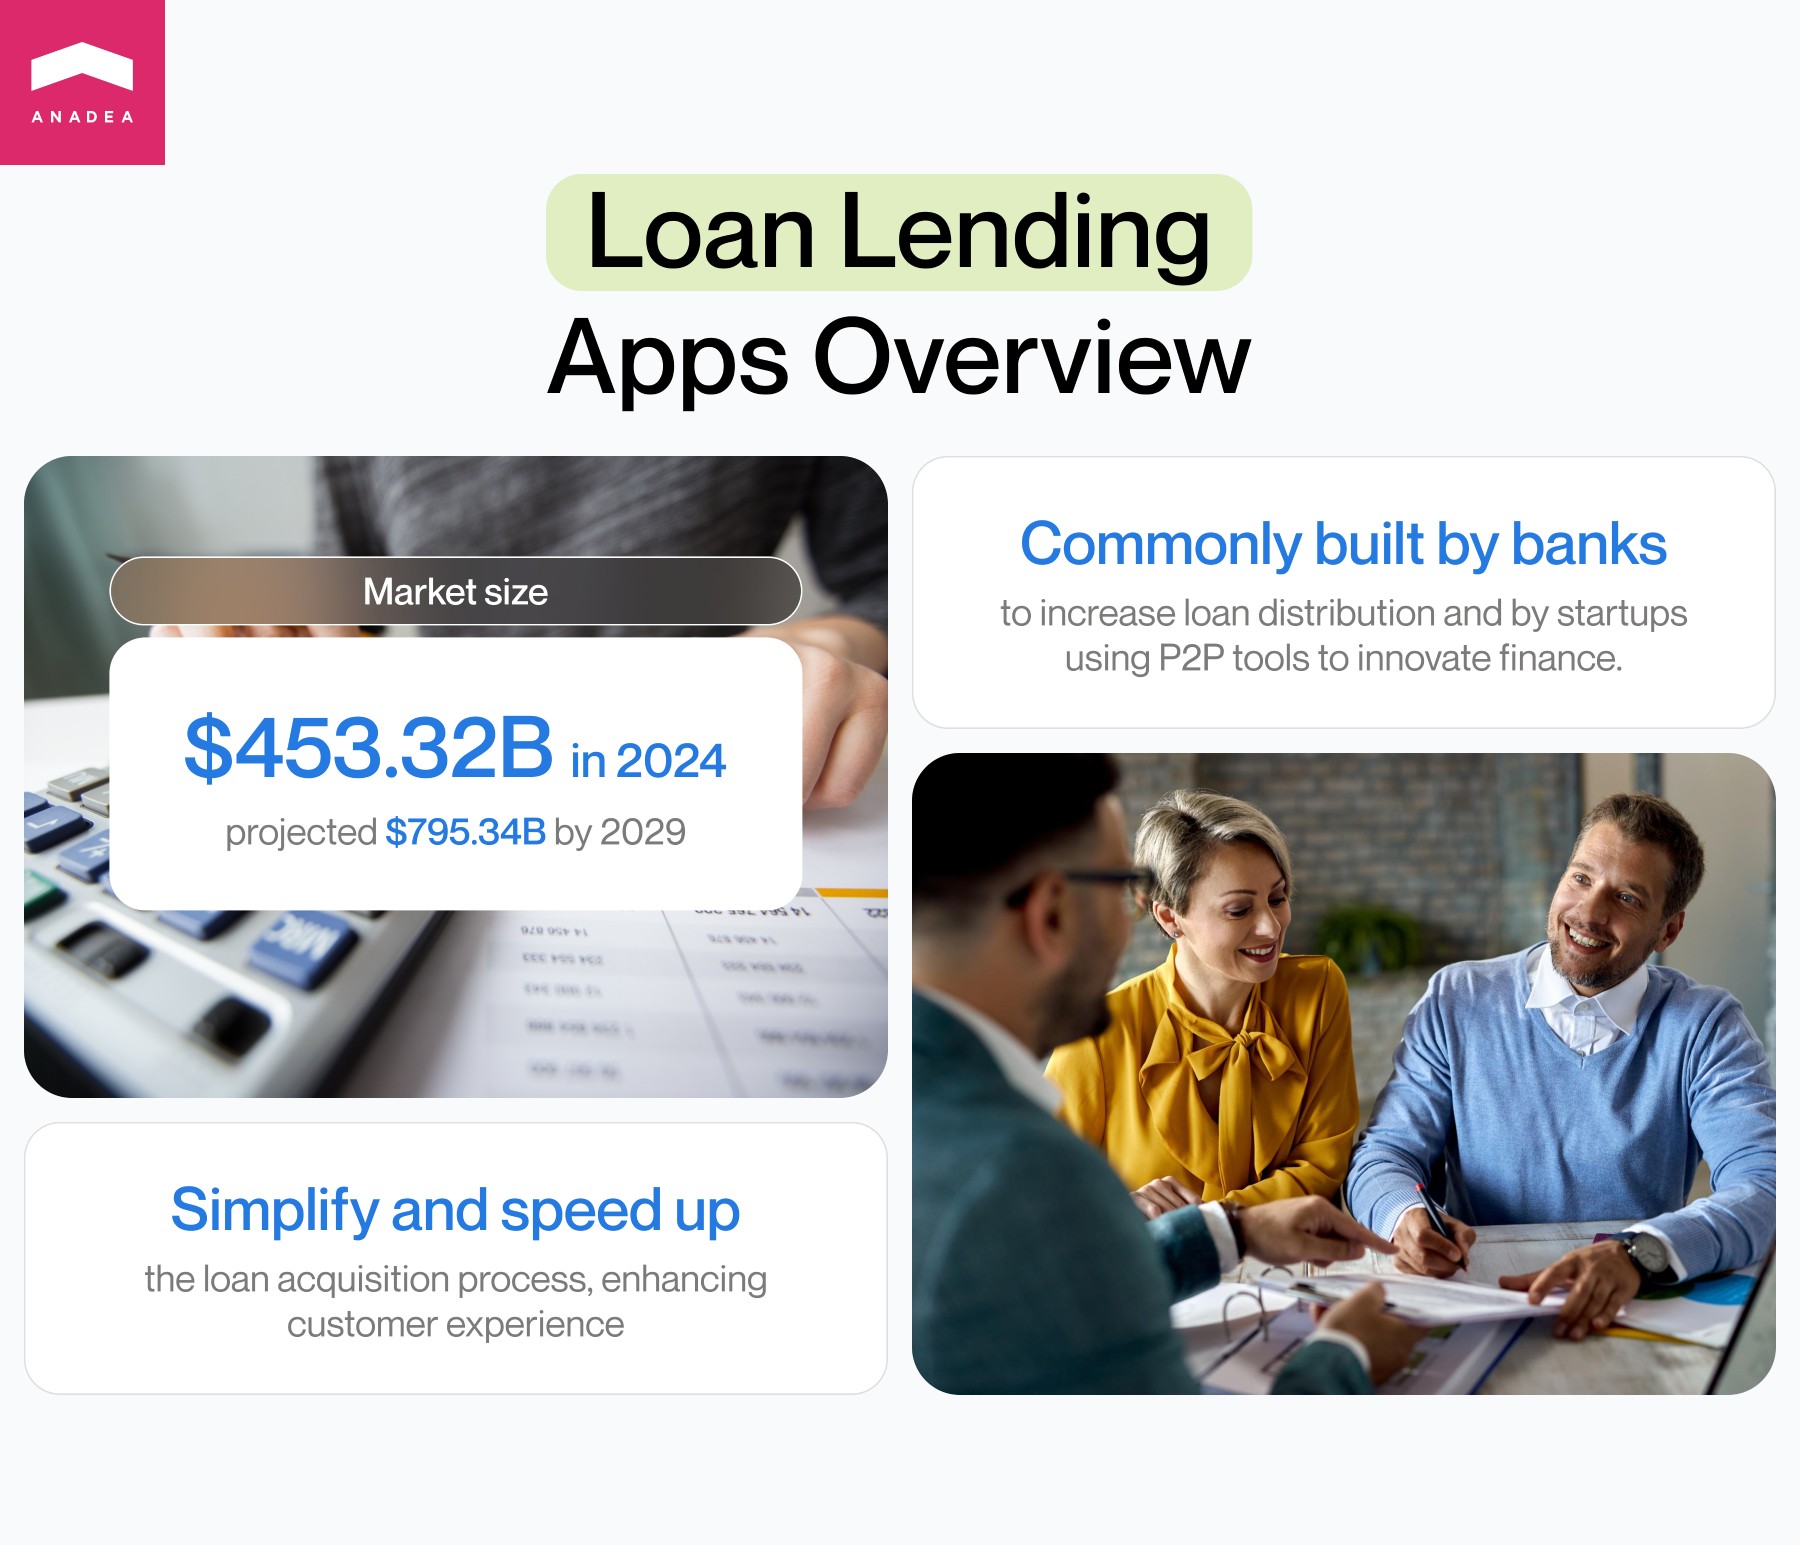 Loan lending apps market overview